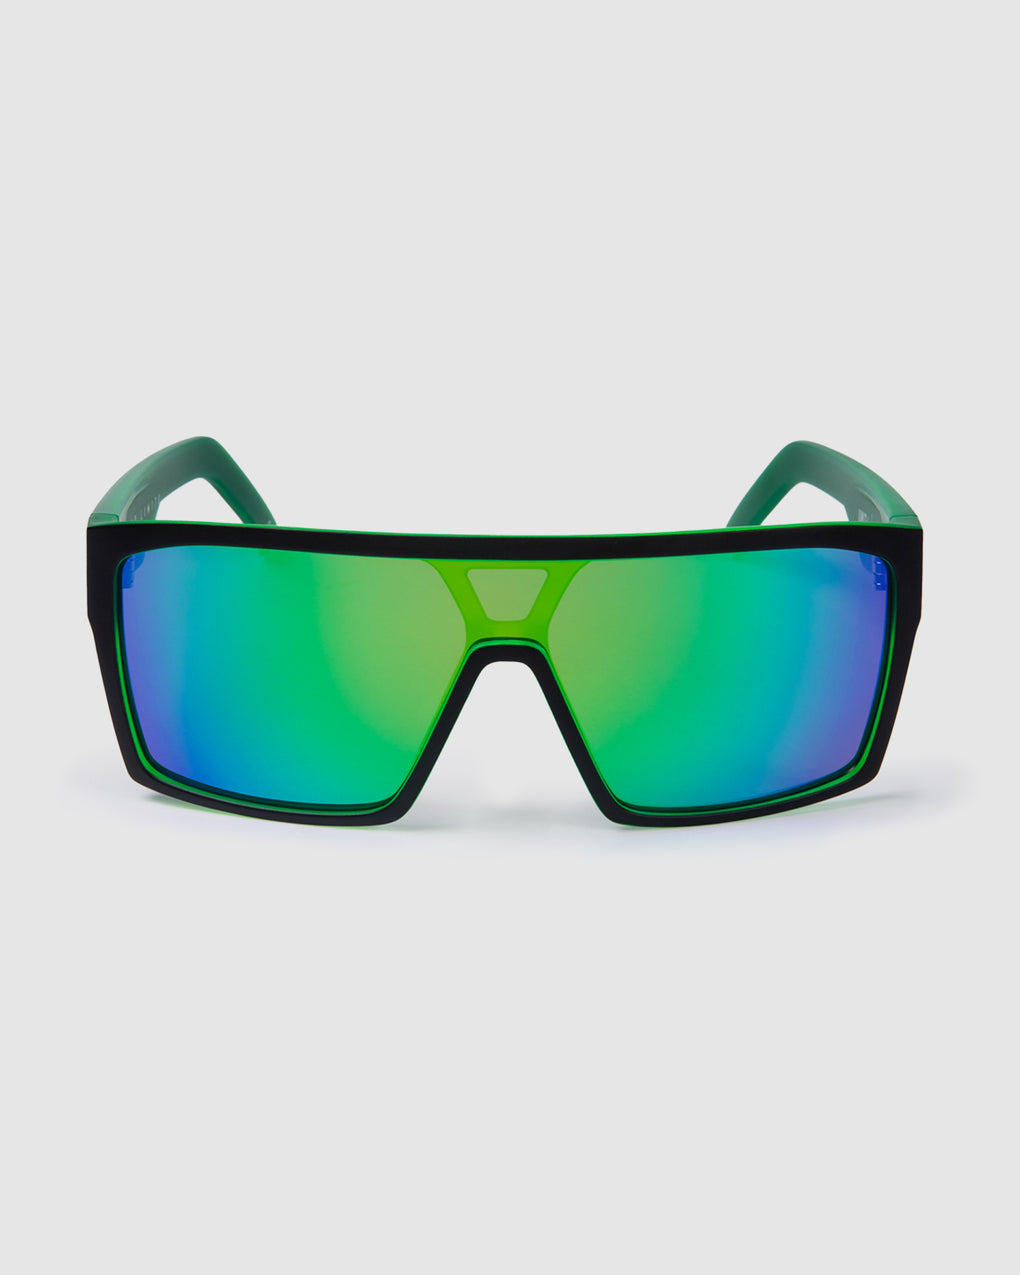 UNIT Sunglasses Command - Matte Black Green Polarised